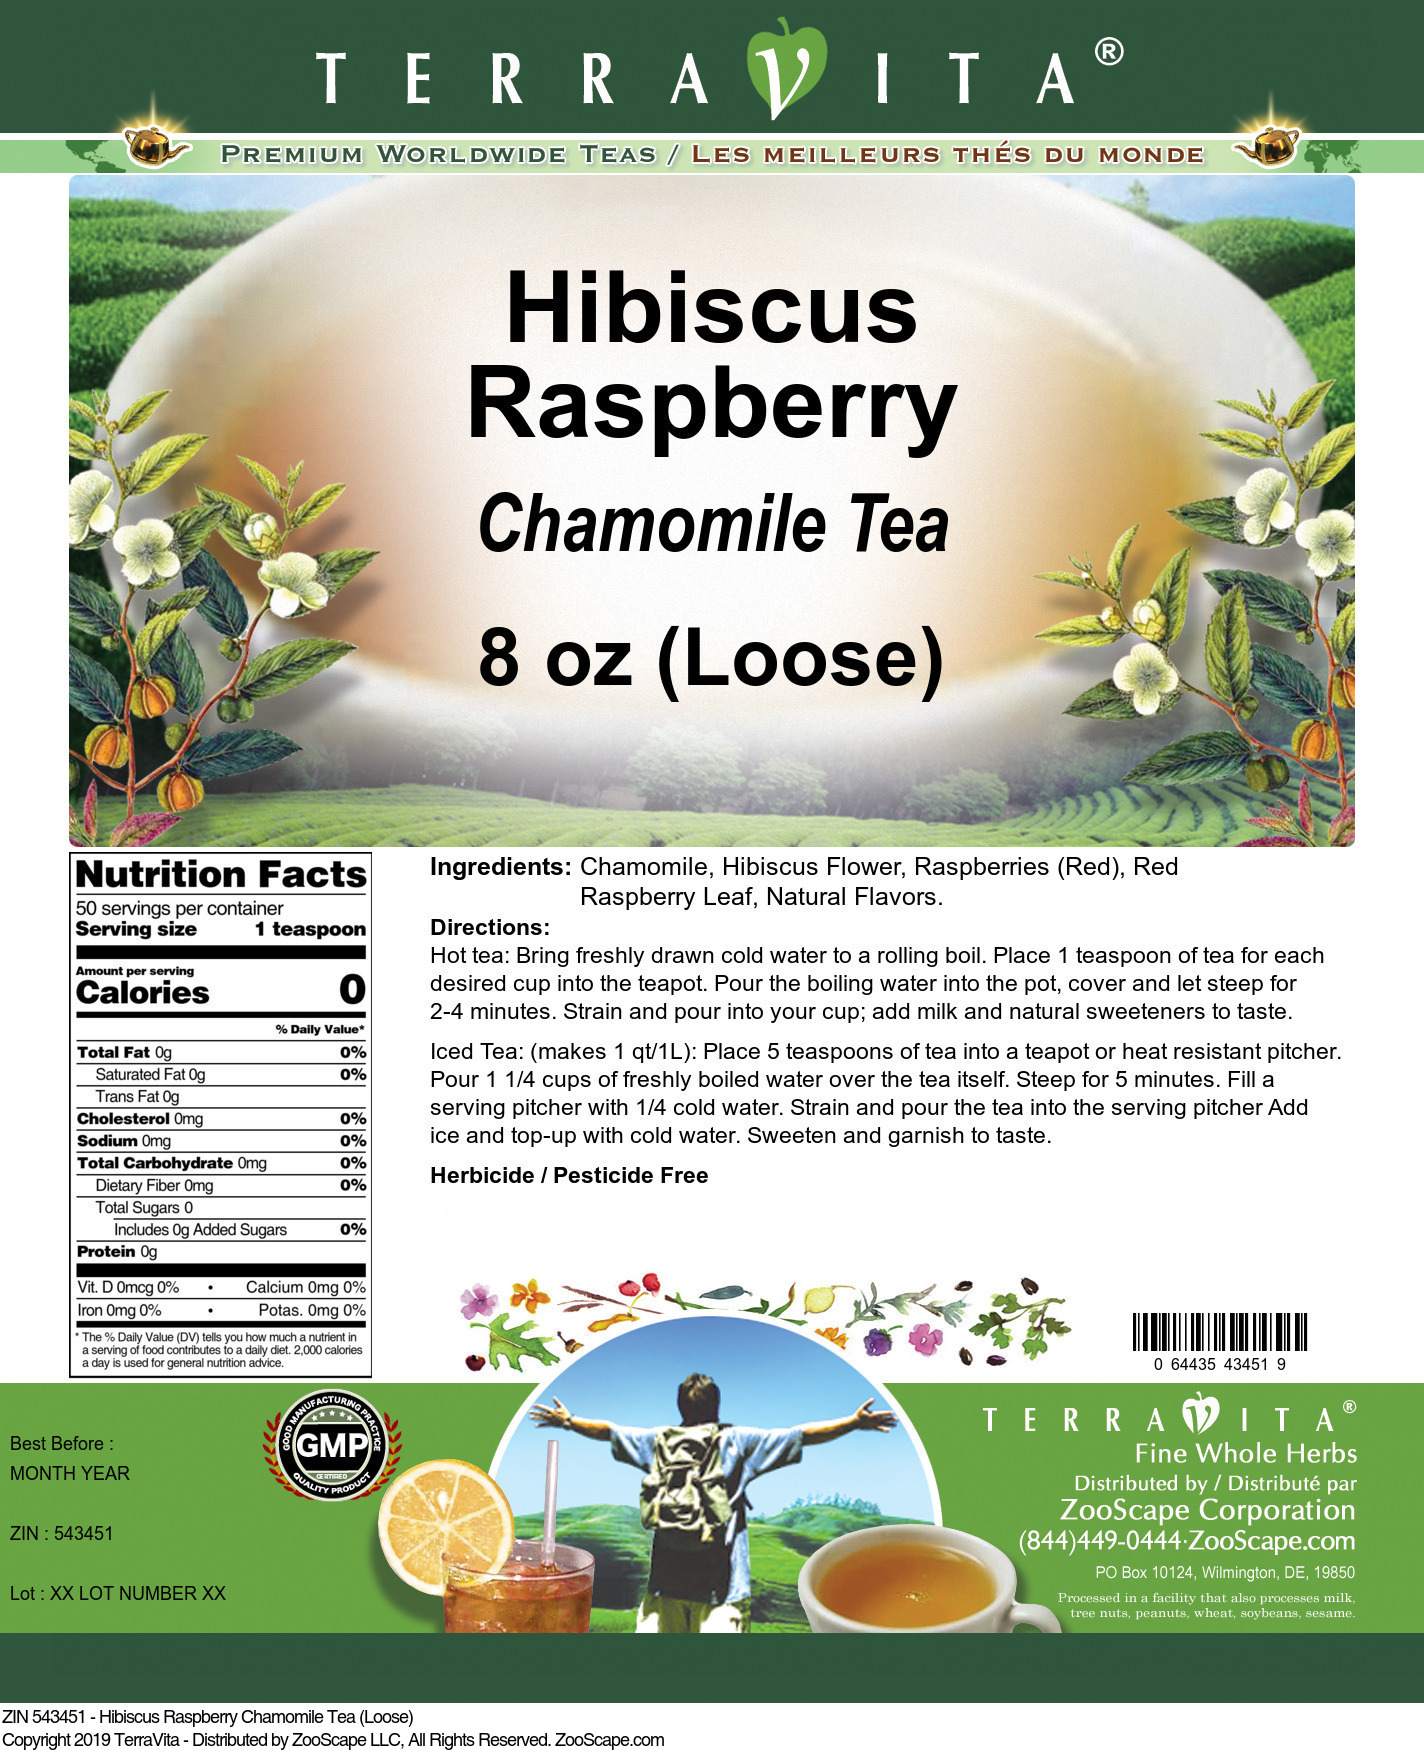 Hibiscus Raspberry Chamomile Tea (Loose) - Label